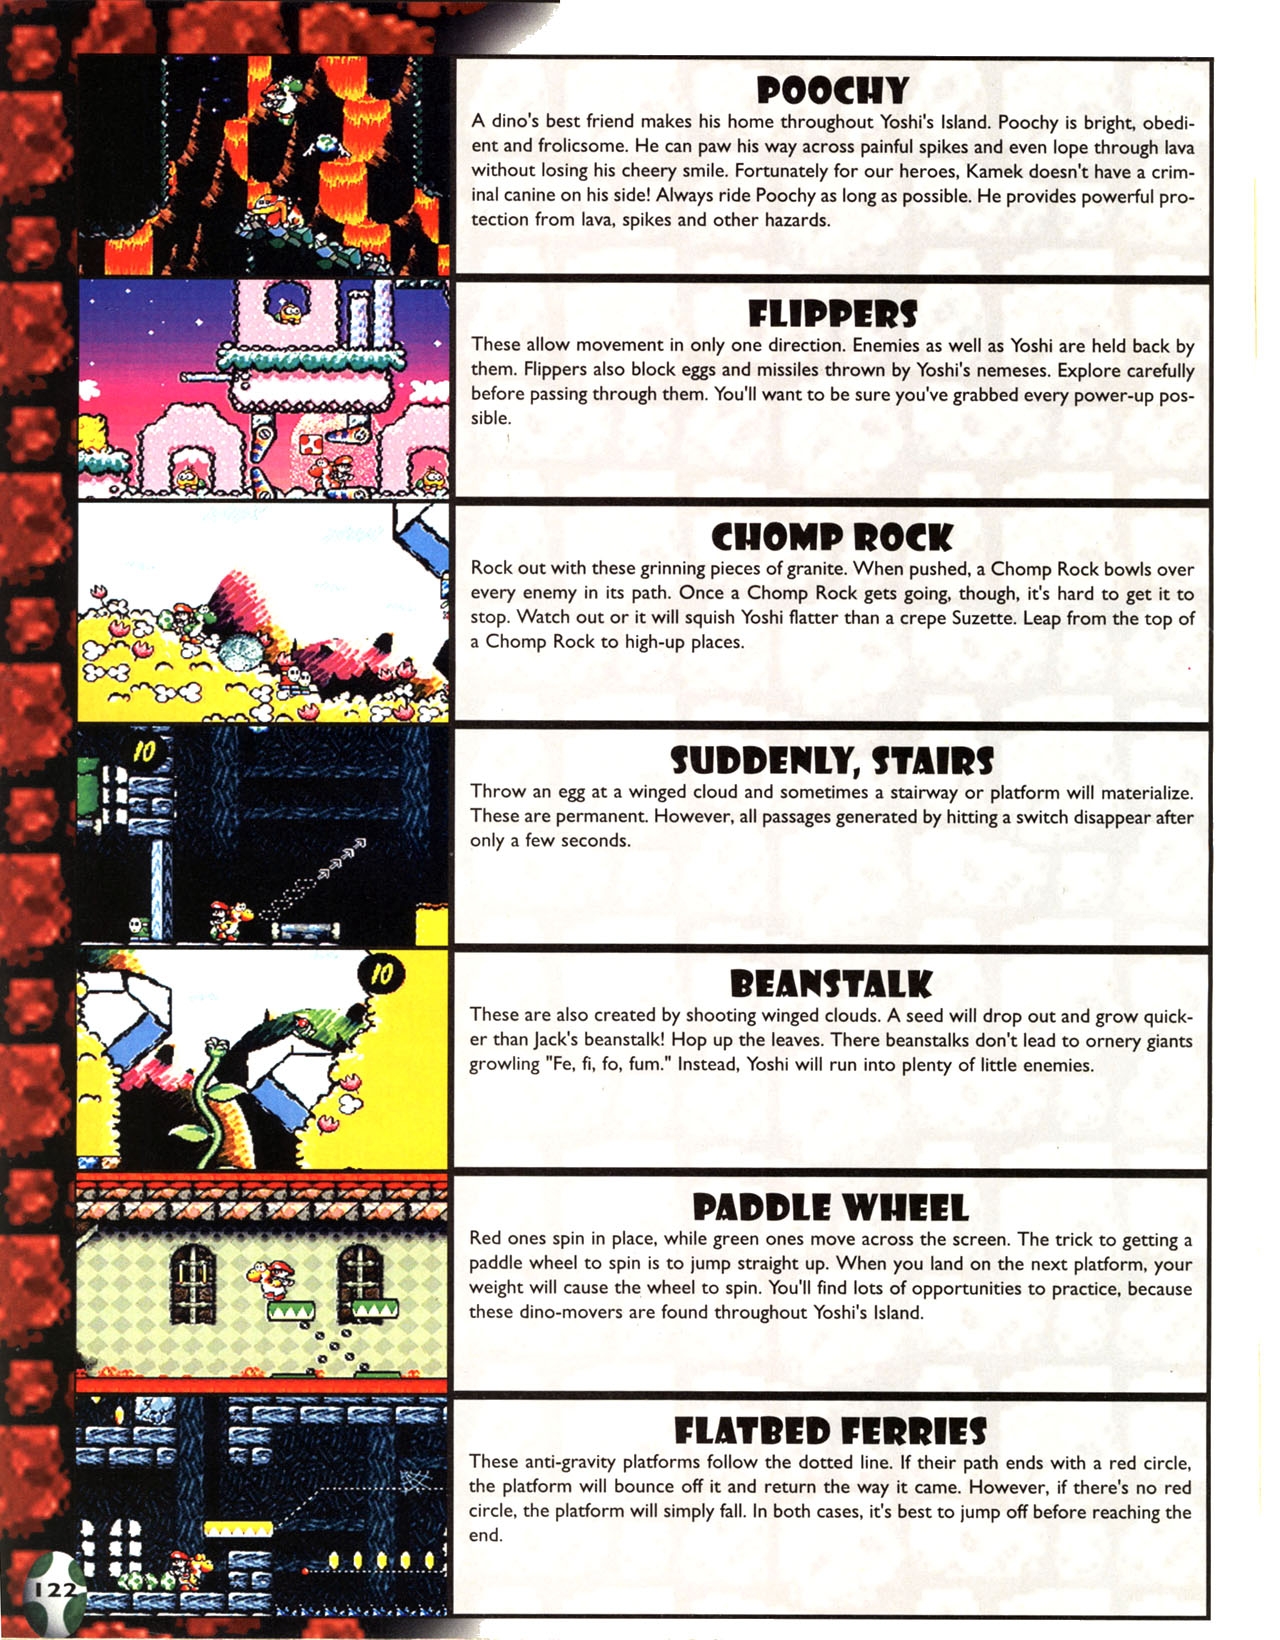 Nintendo Players Guide (SNES) - Super Mario World 2 - Yoshis Island (1995) 65